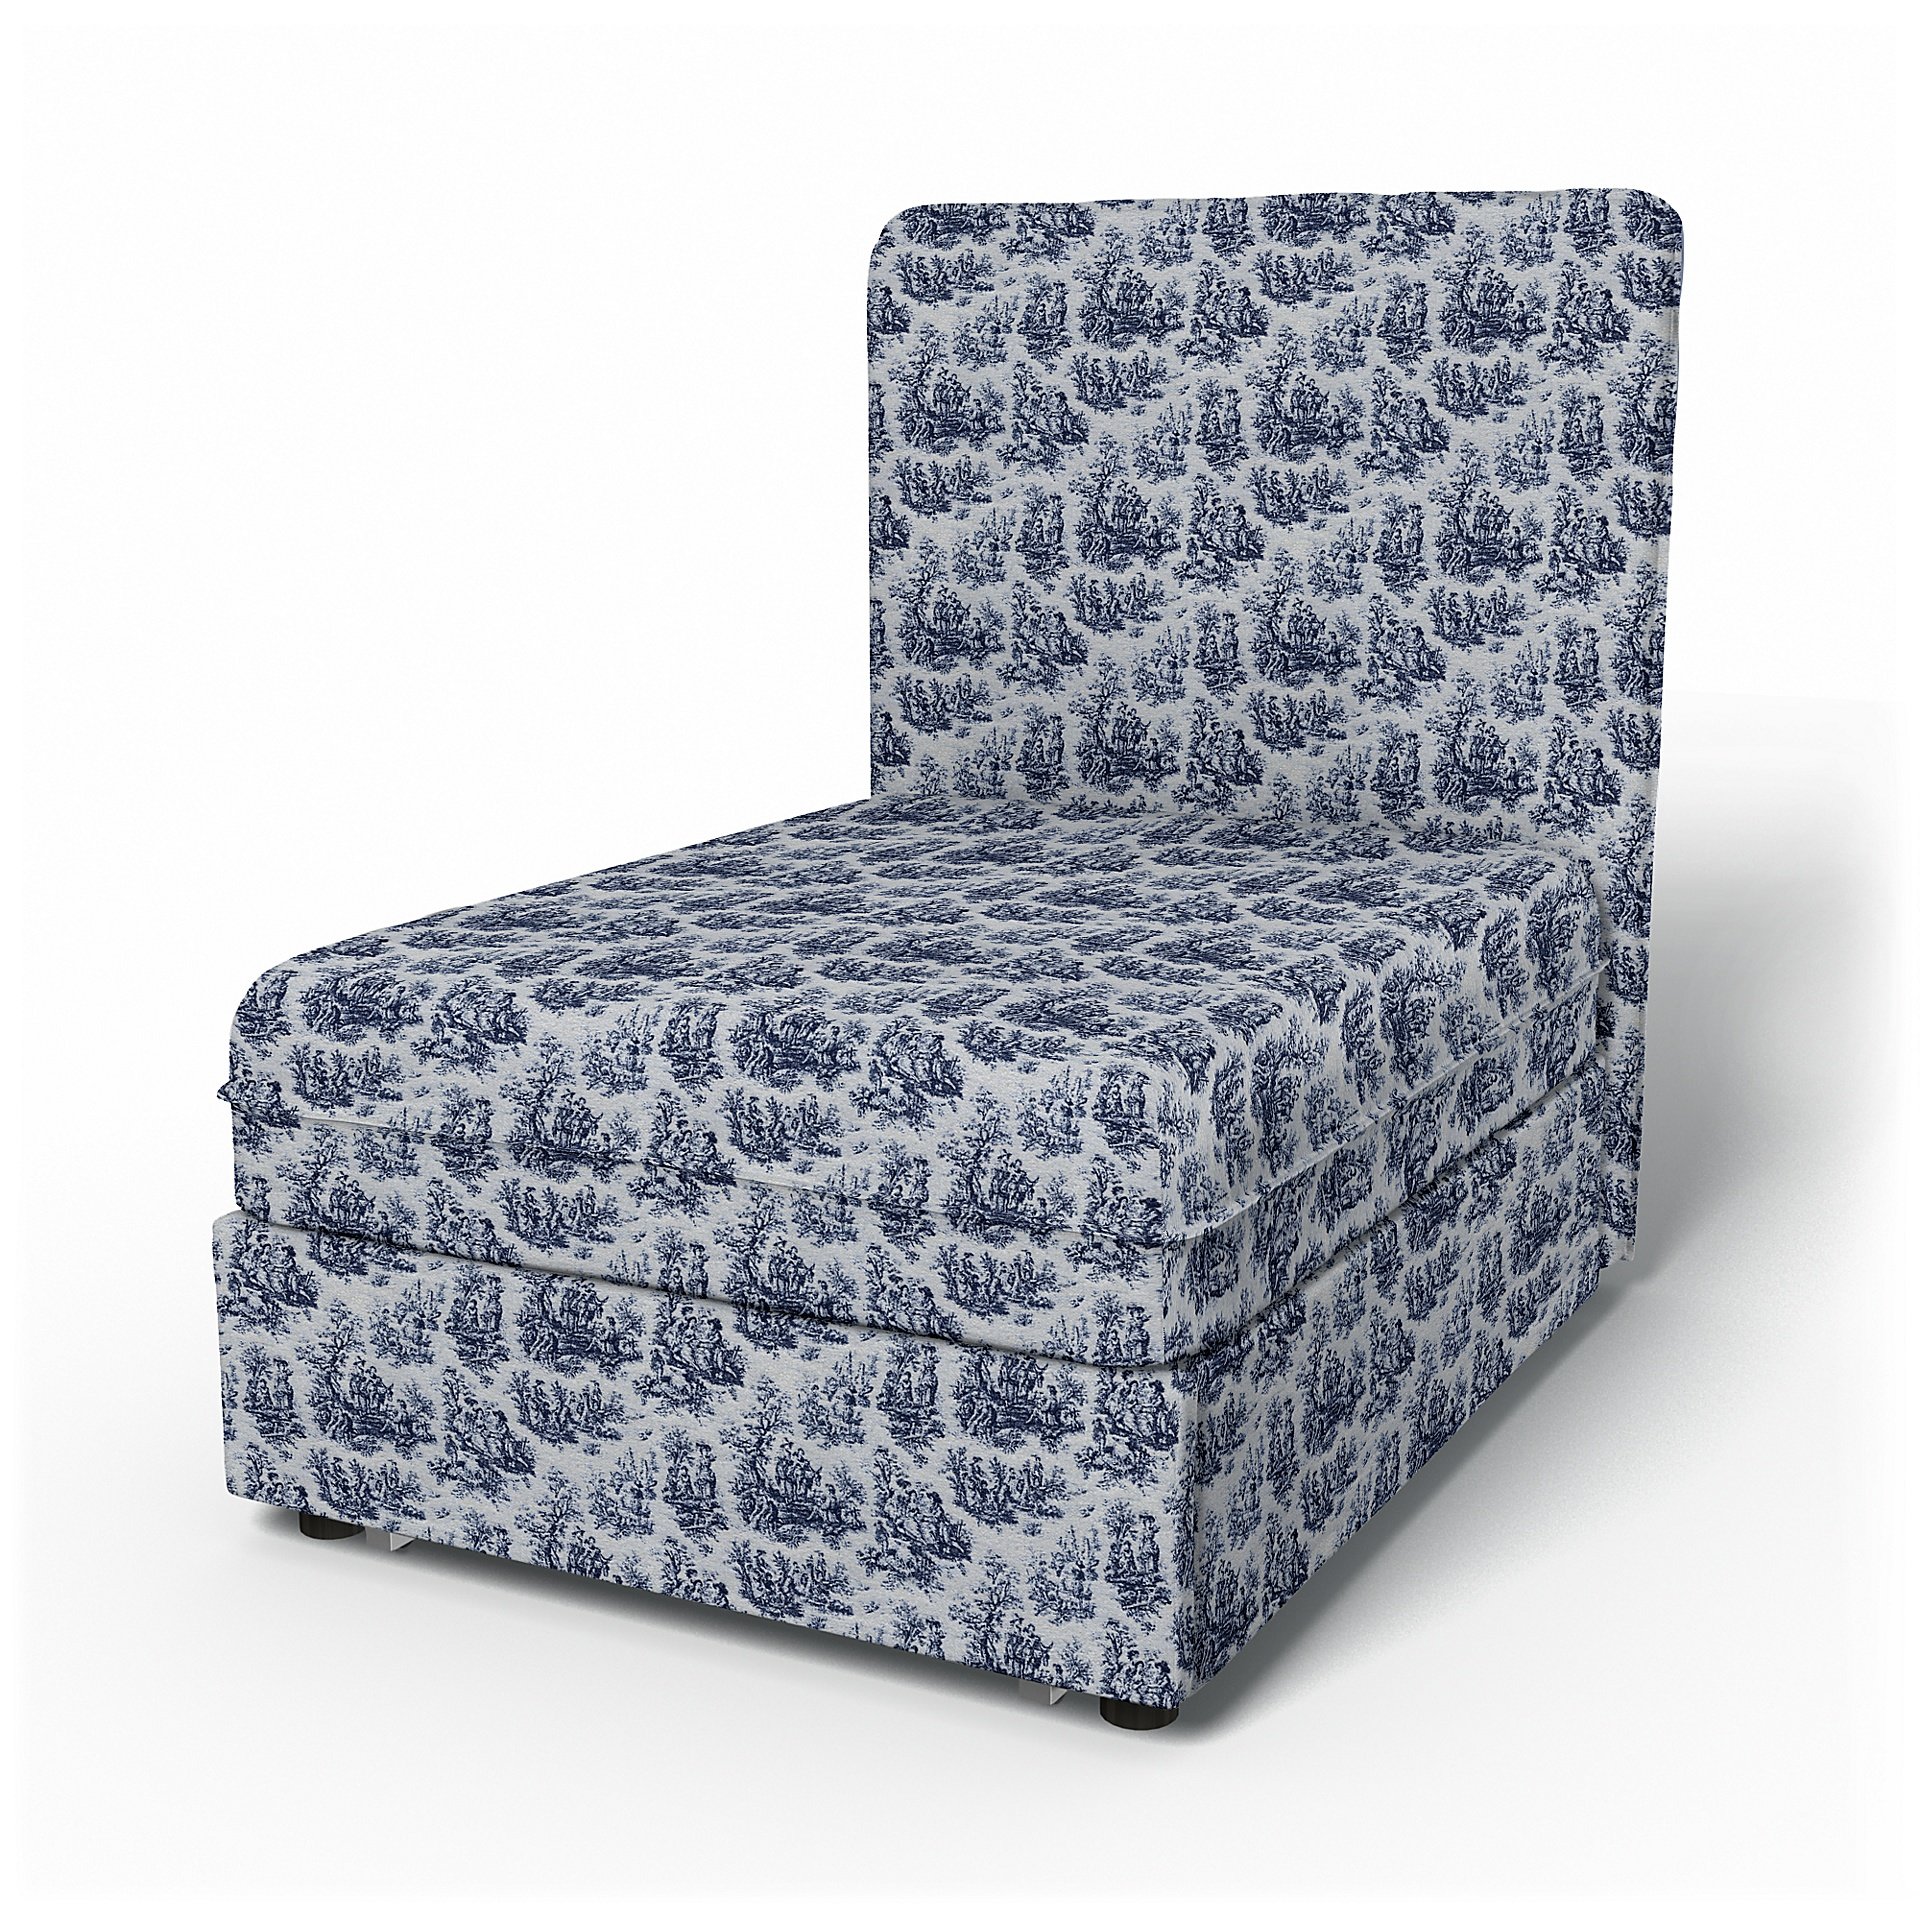 IKEA - Vallentuna Seat Module with High Back Sofa Bed Cover (80x100x46cm), Dark Blue, Boucle & Textu